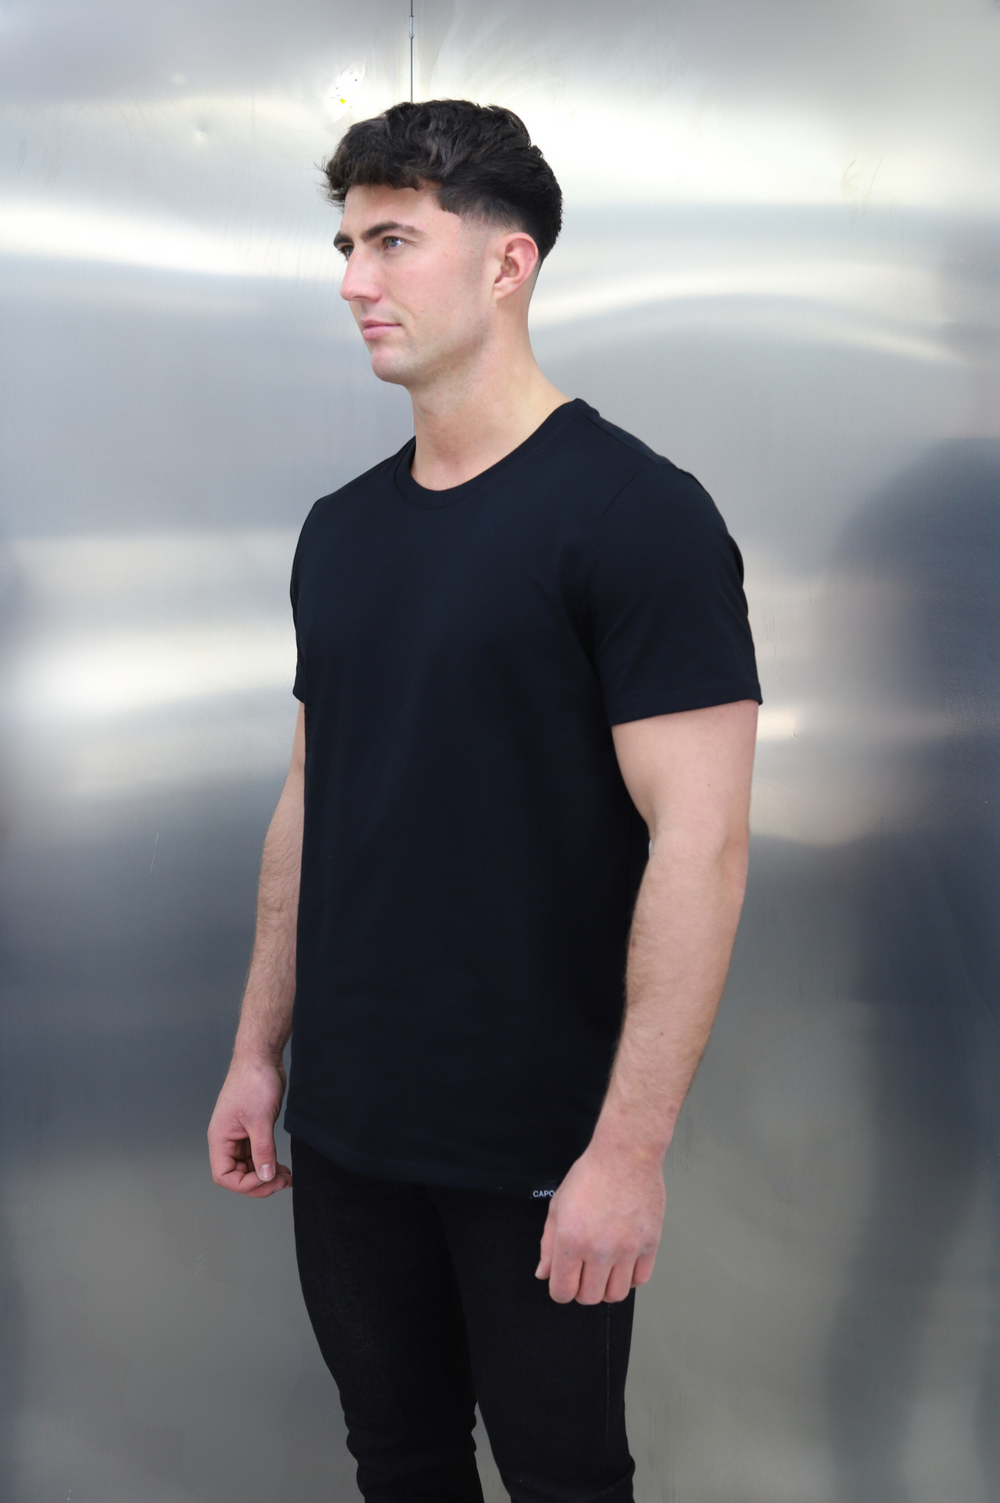 Capo HEAVYWEIGHT Cotton T-Shirt - Black